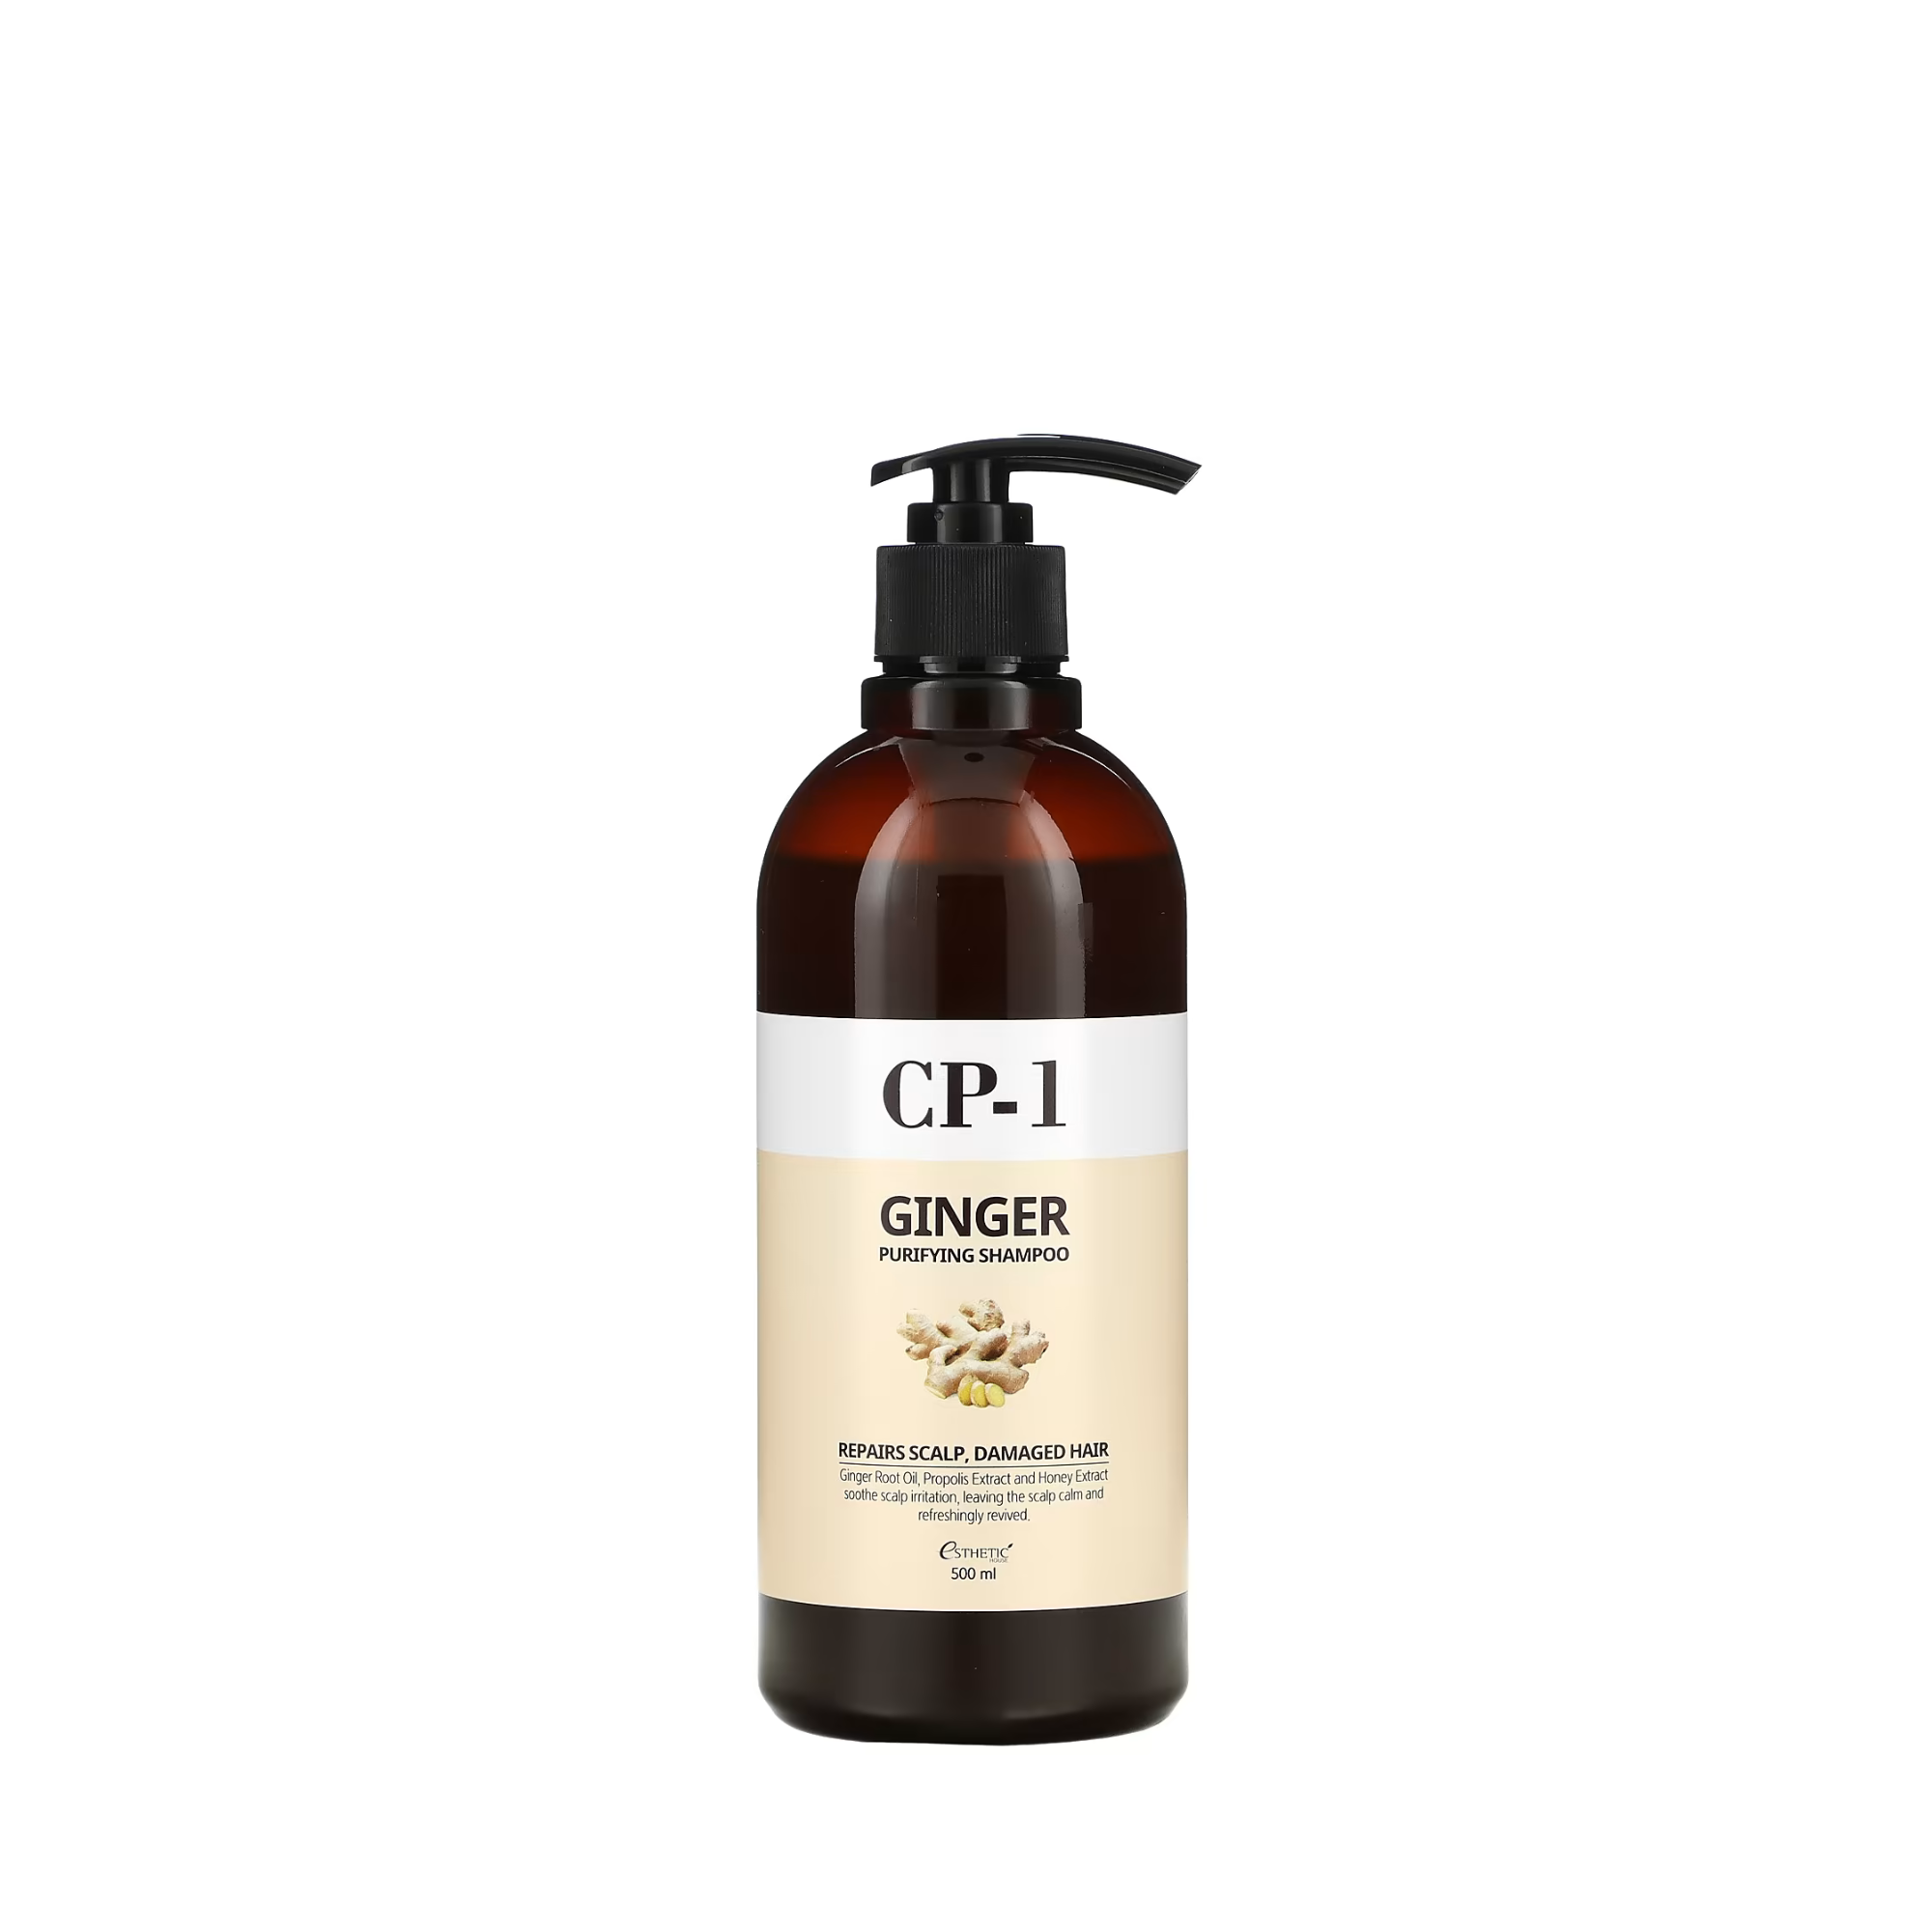 Nourishing shampoo by Esthetic House (Esthetic House CP-1 Ginger Purifying Shampoo)